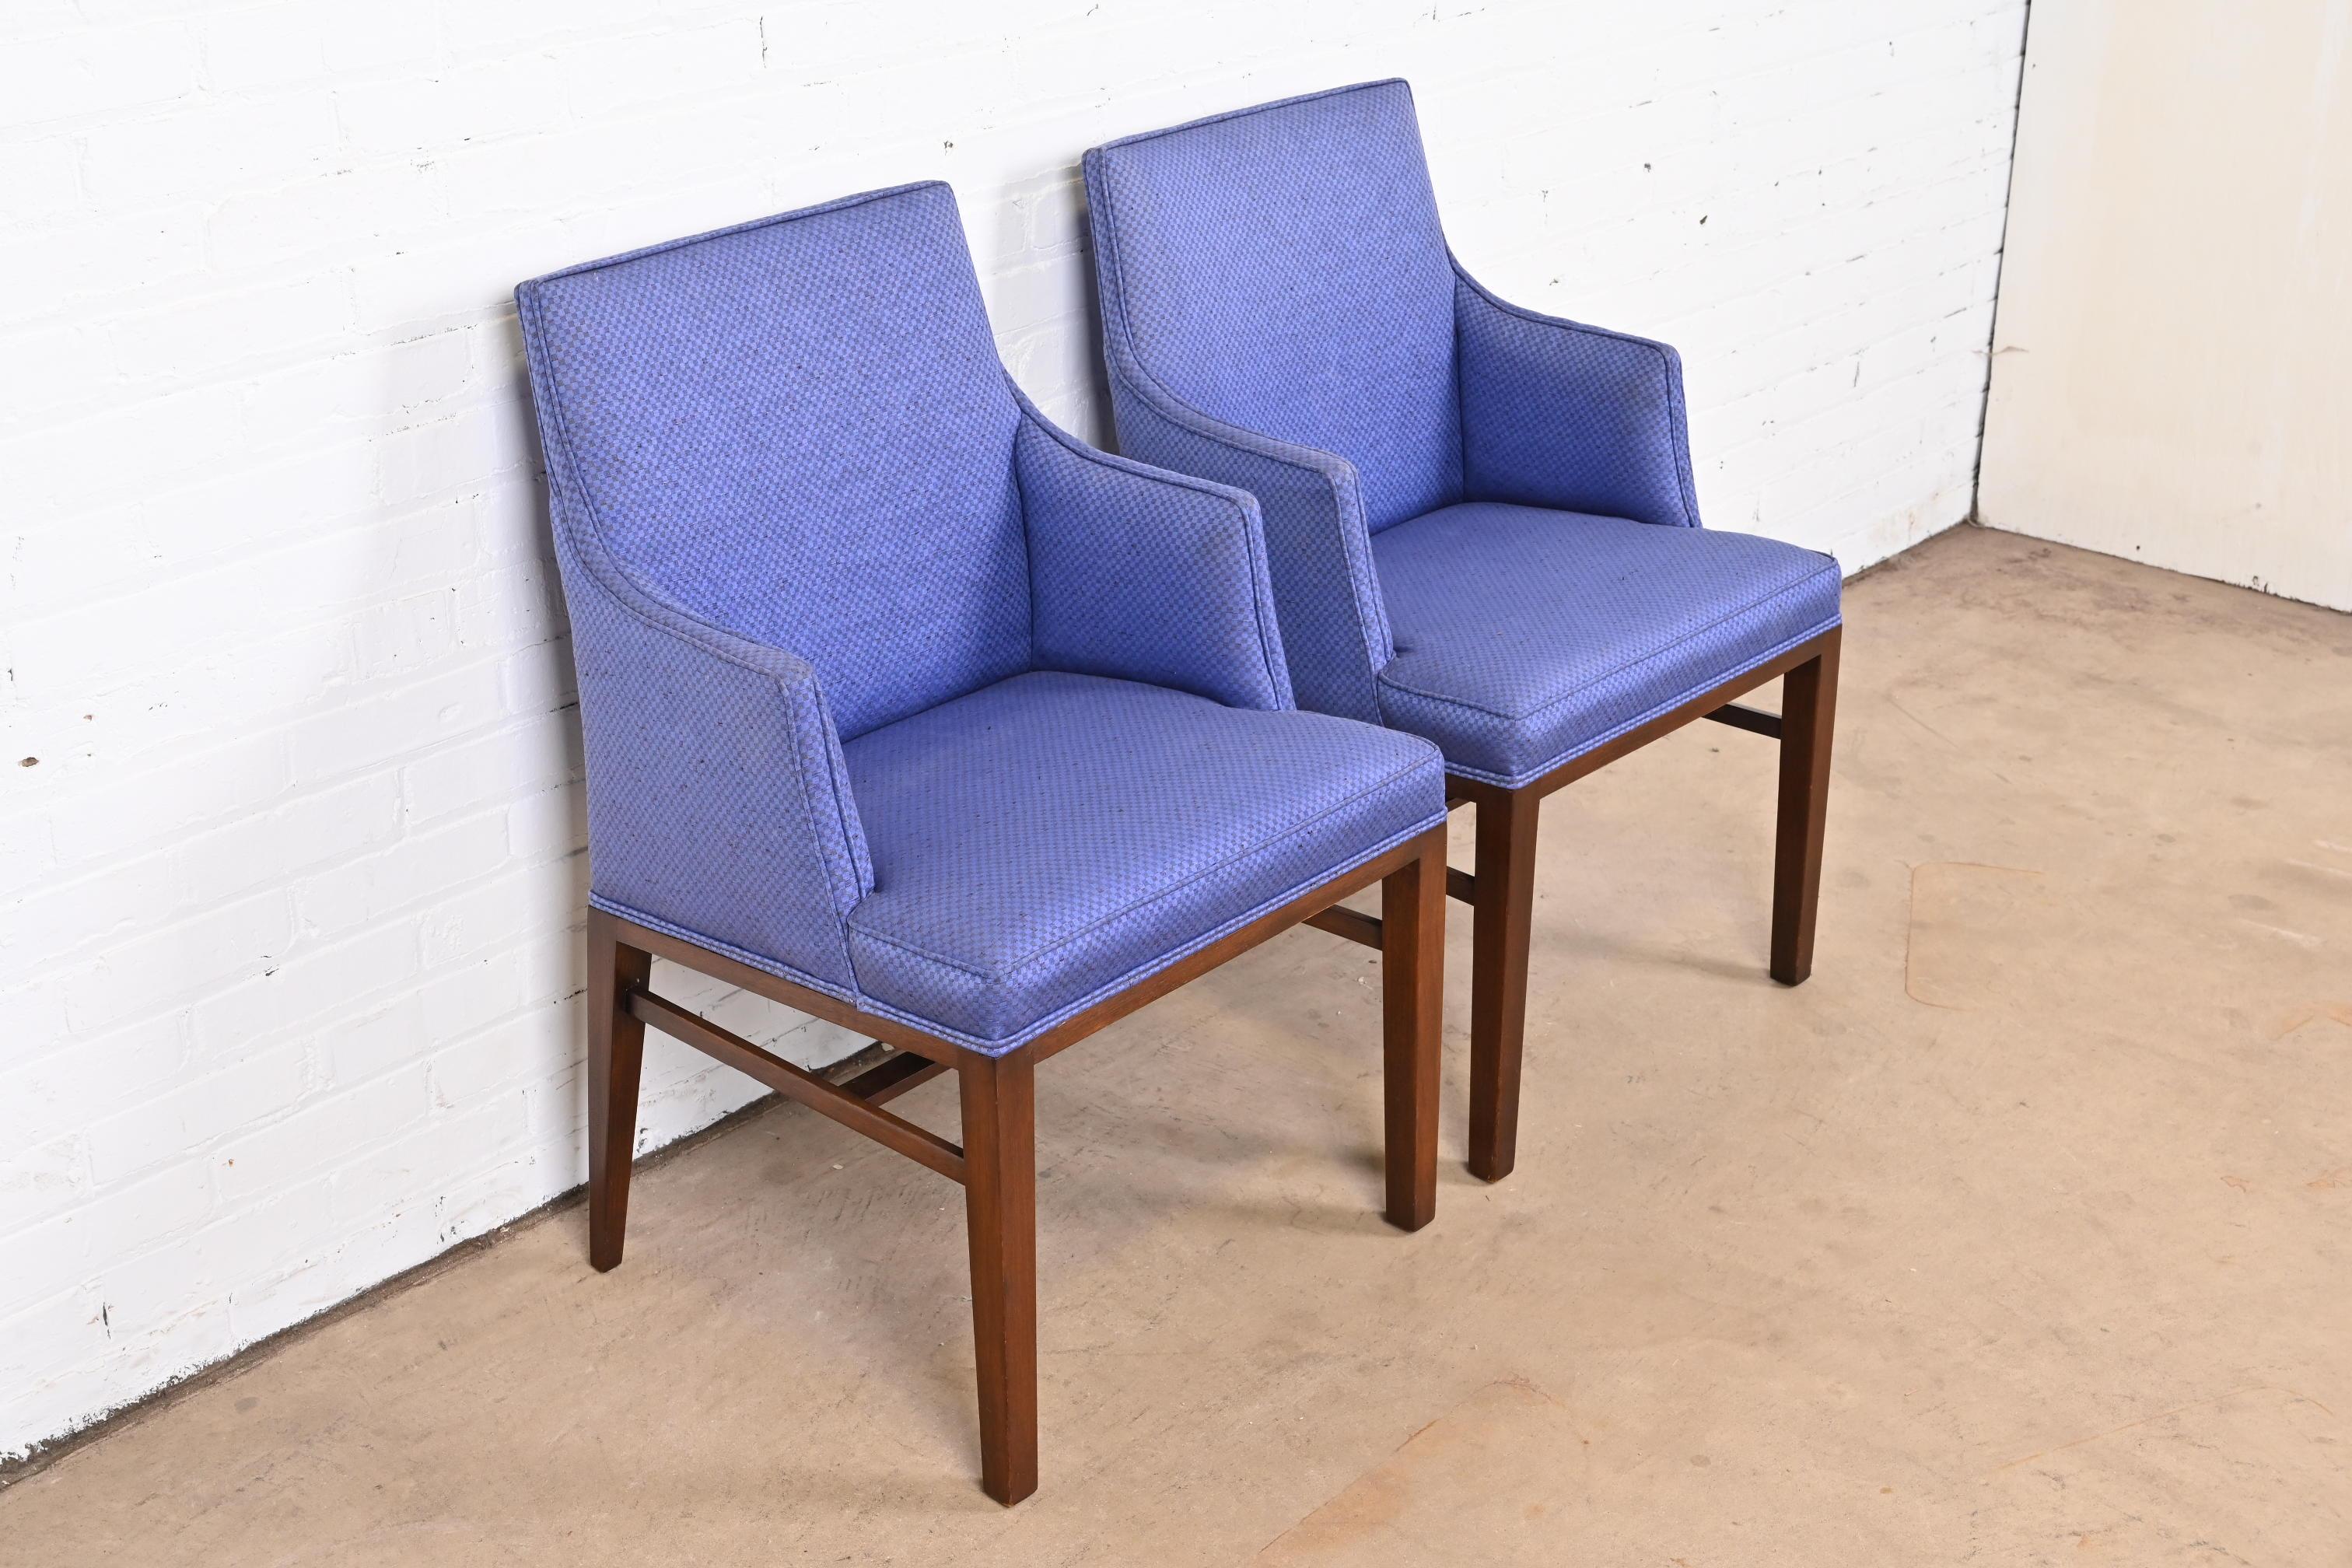 Mid-20th Century Edward Wormley for Dunbar Mid-Century Modern Arm Chairs, Pair